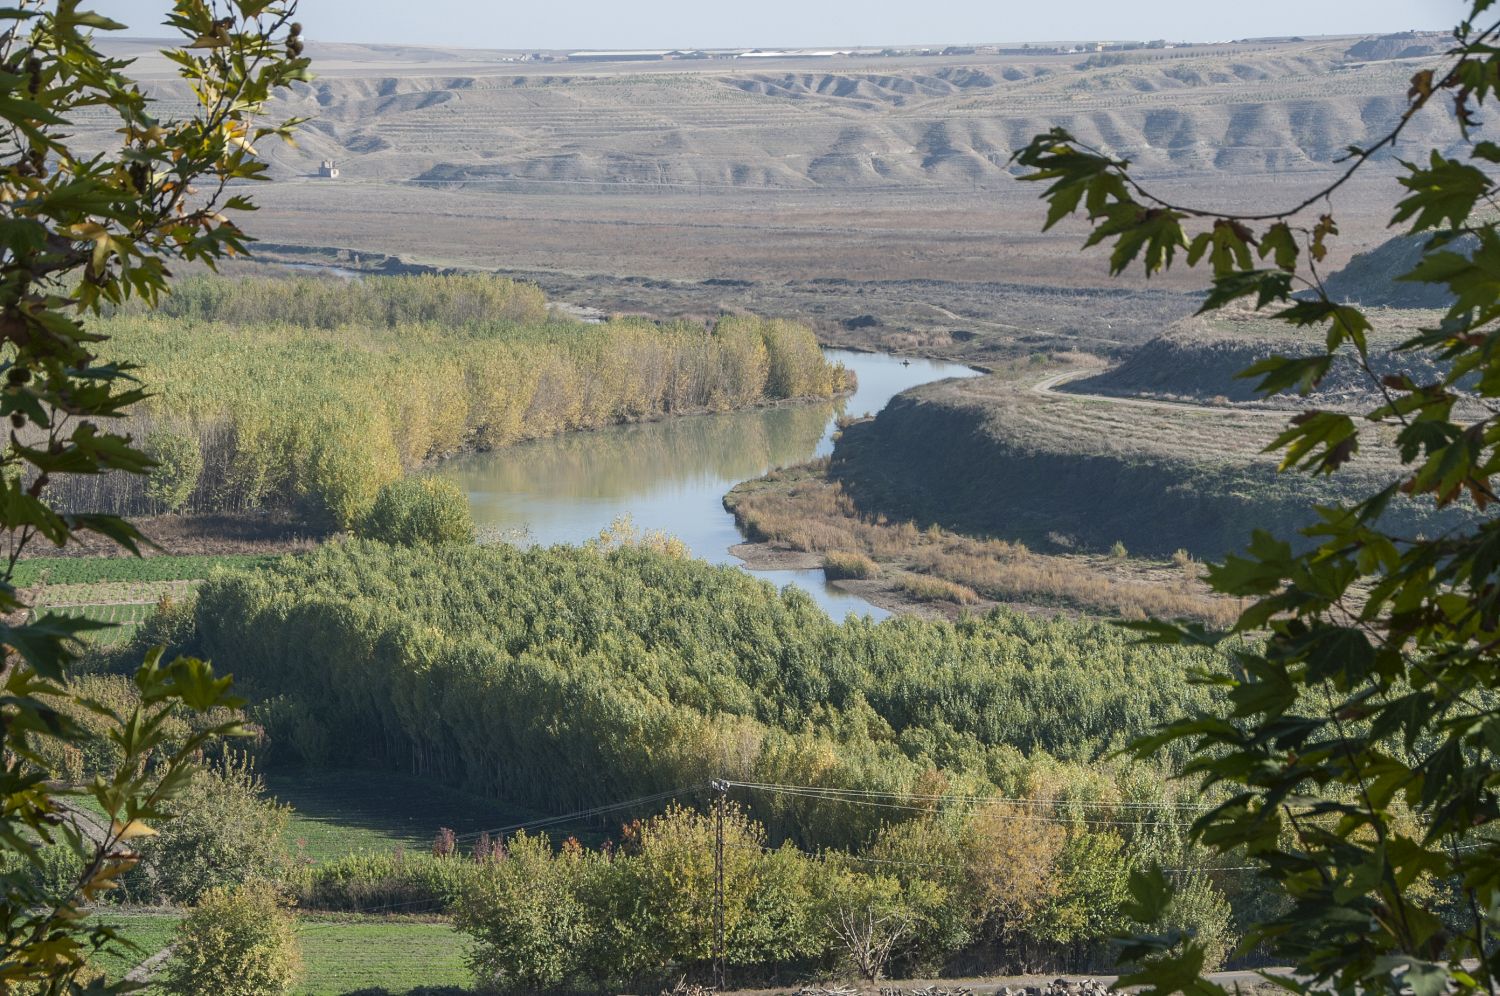 View of River Tigris and surrounding landscape from Gazi Köşkü.<p class="MsoNormal"><o:p></o:p></p>